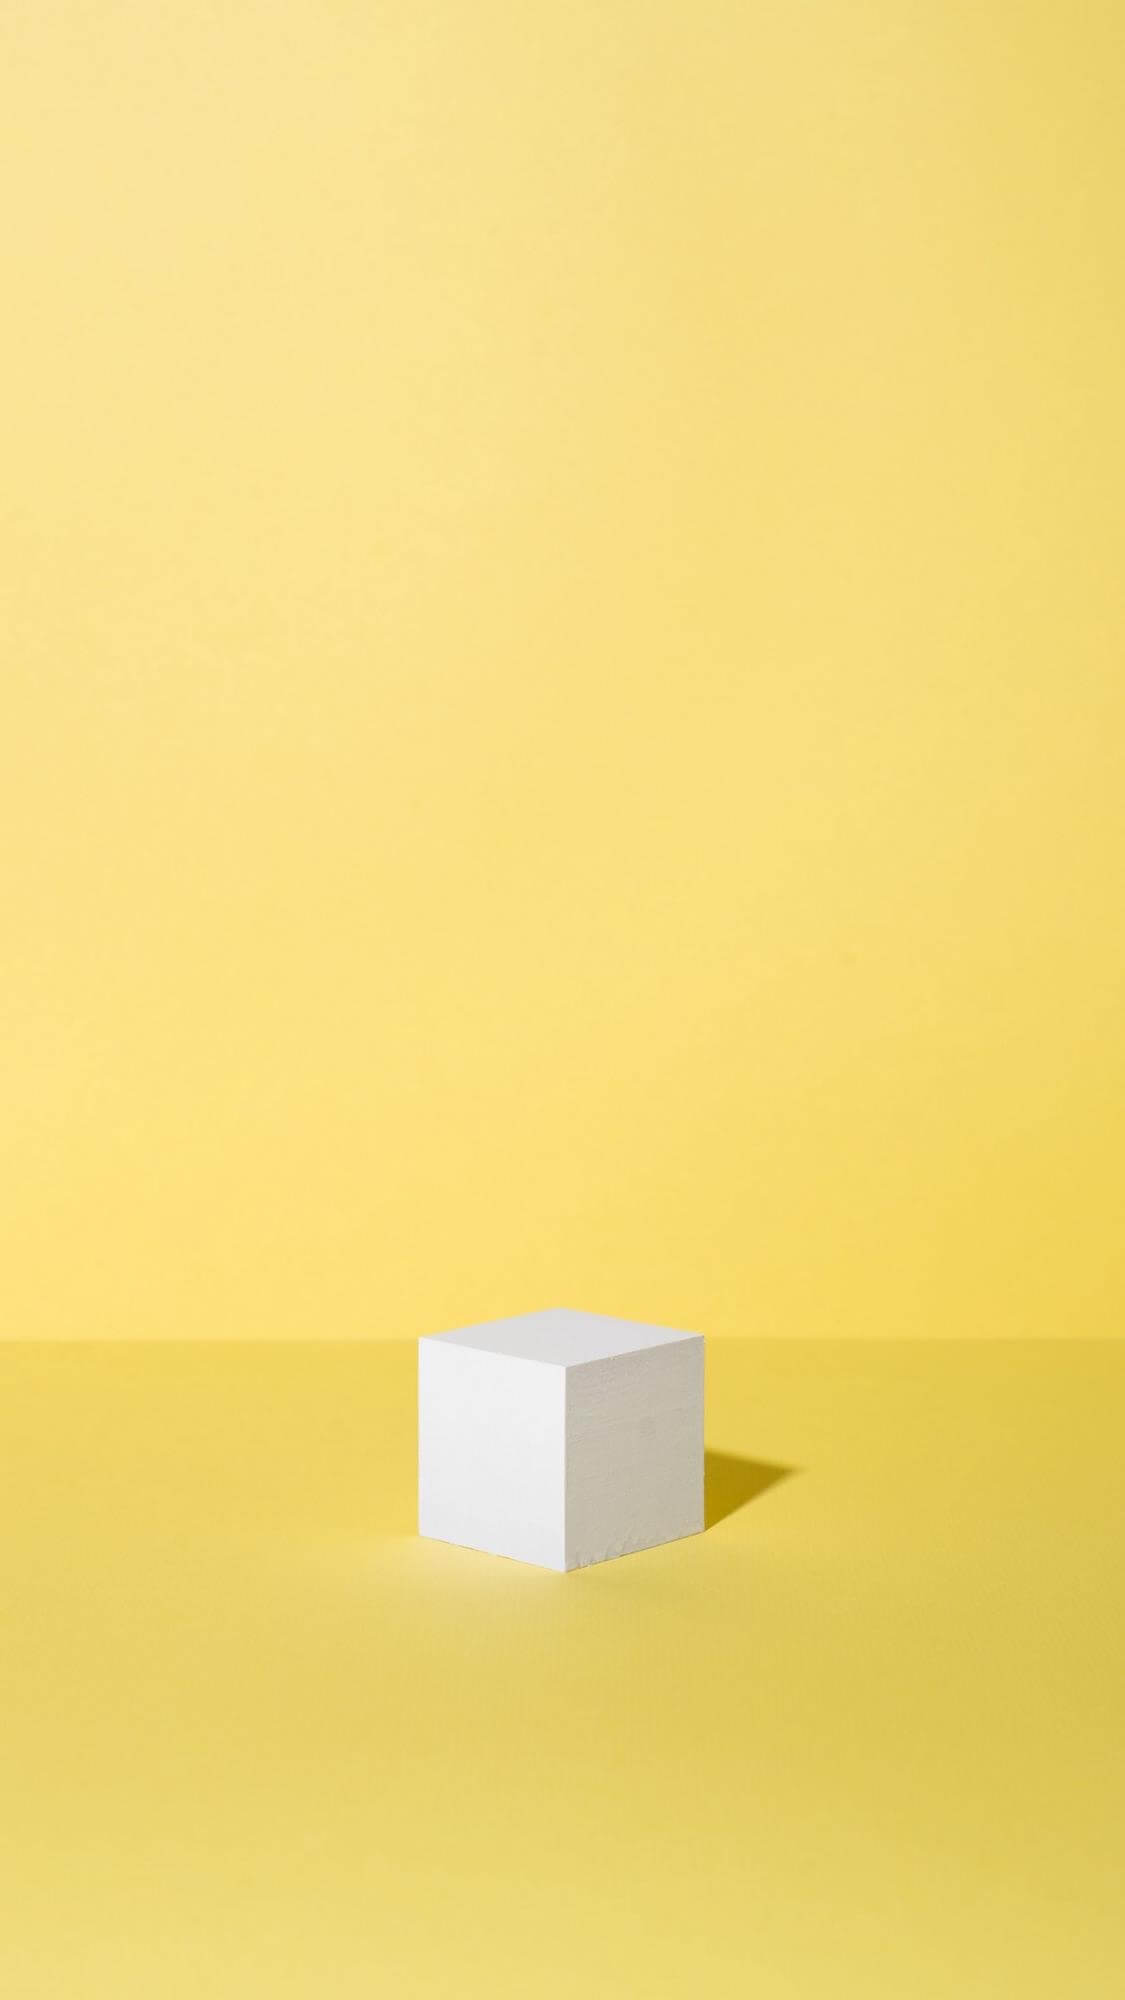 Three-dimensional cube